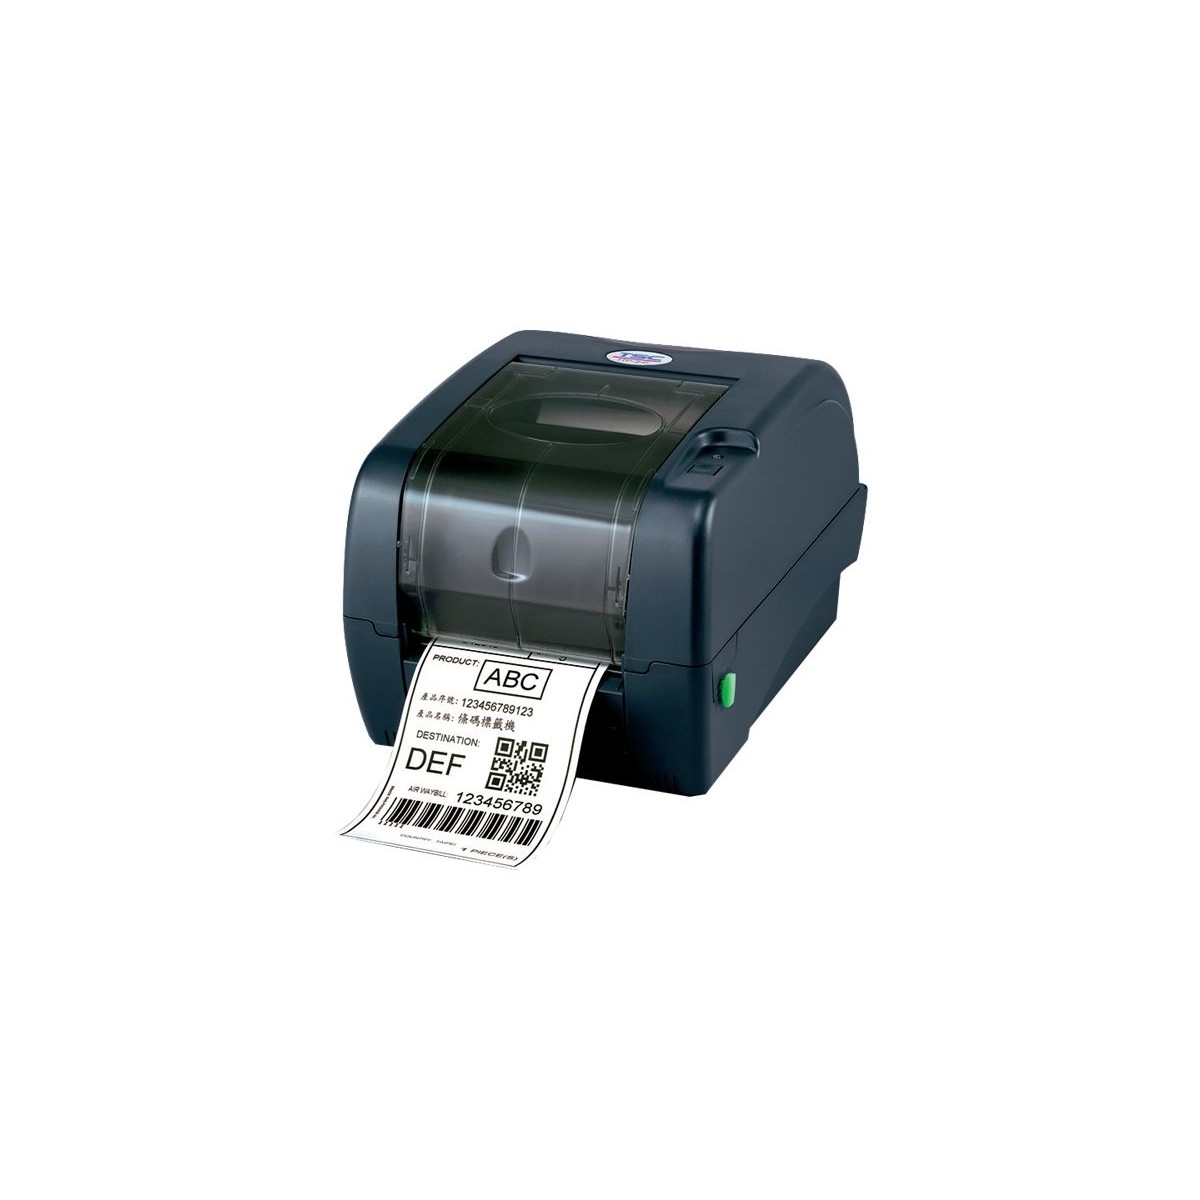 TSC TTP-345 300dpi Multi-IF LAN - Label Printer - Label Printer